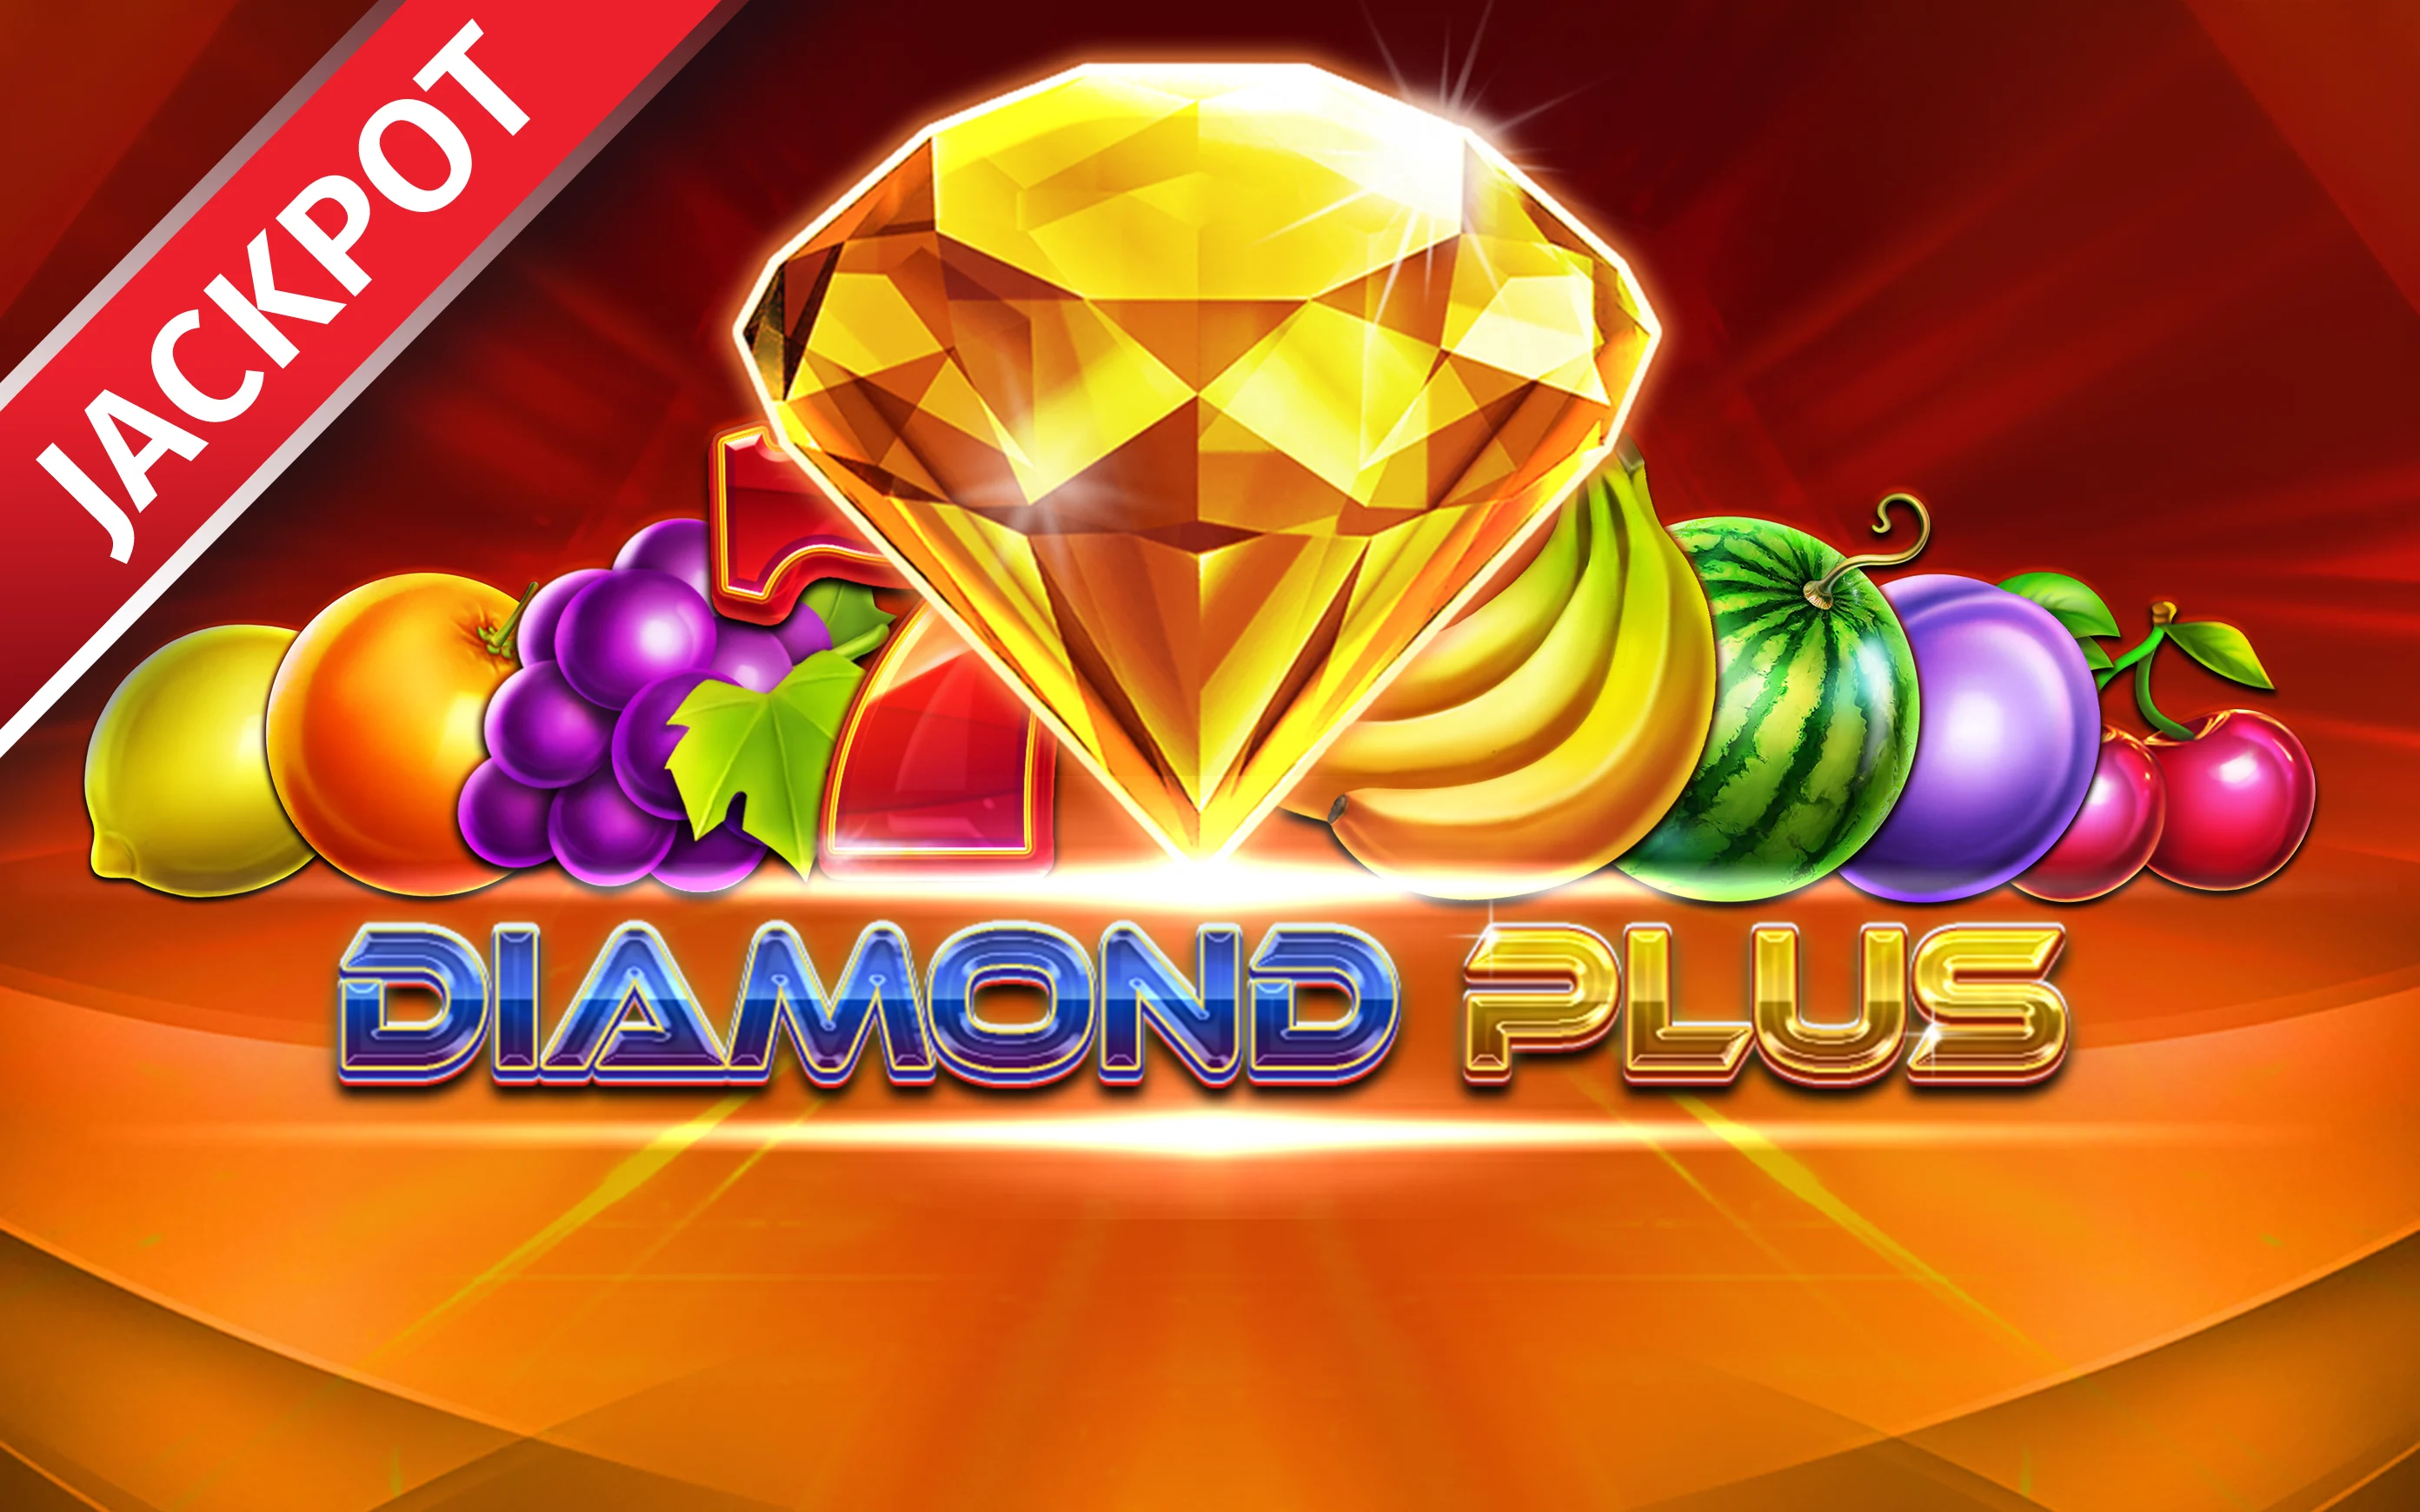 Jogue Diamond Plus no casino online Starcasino.be 